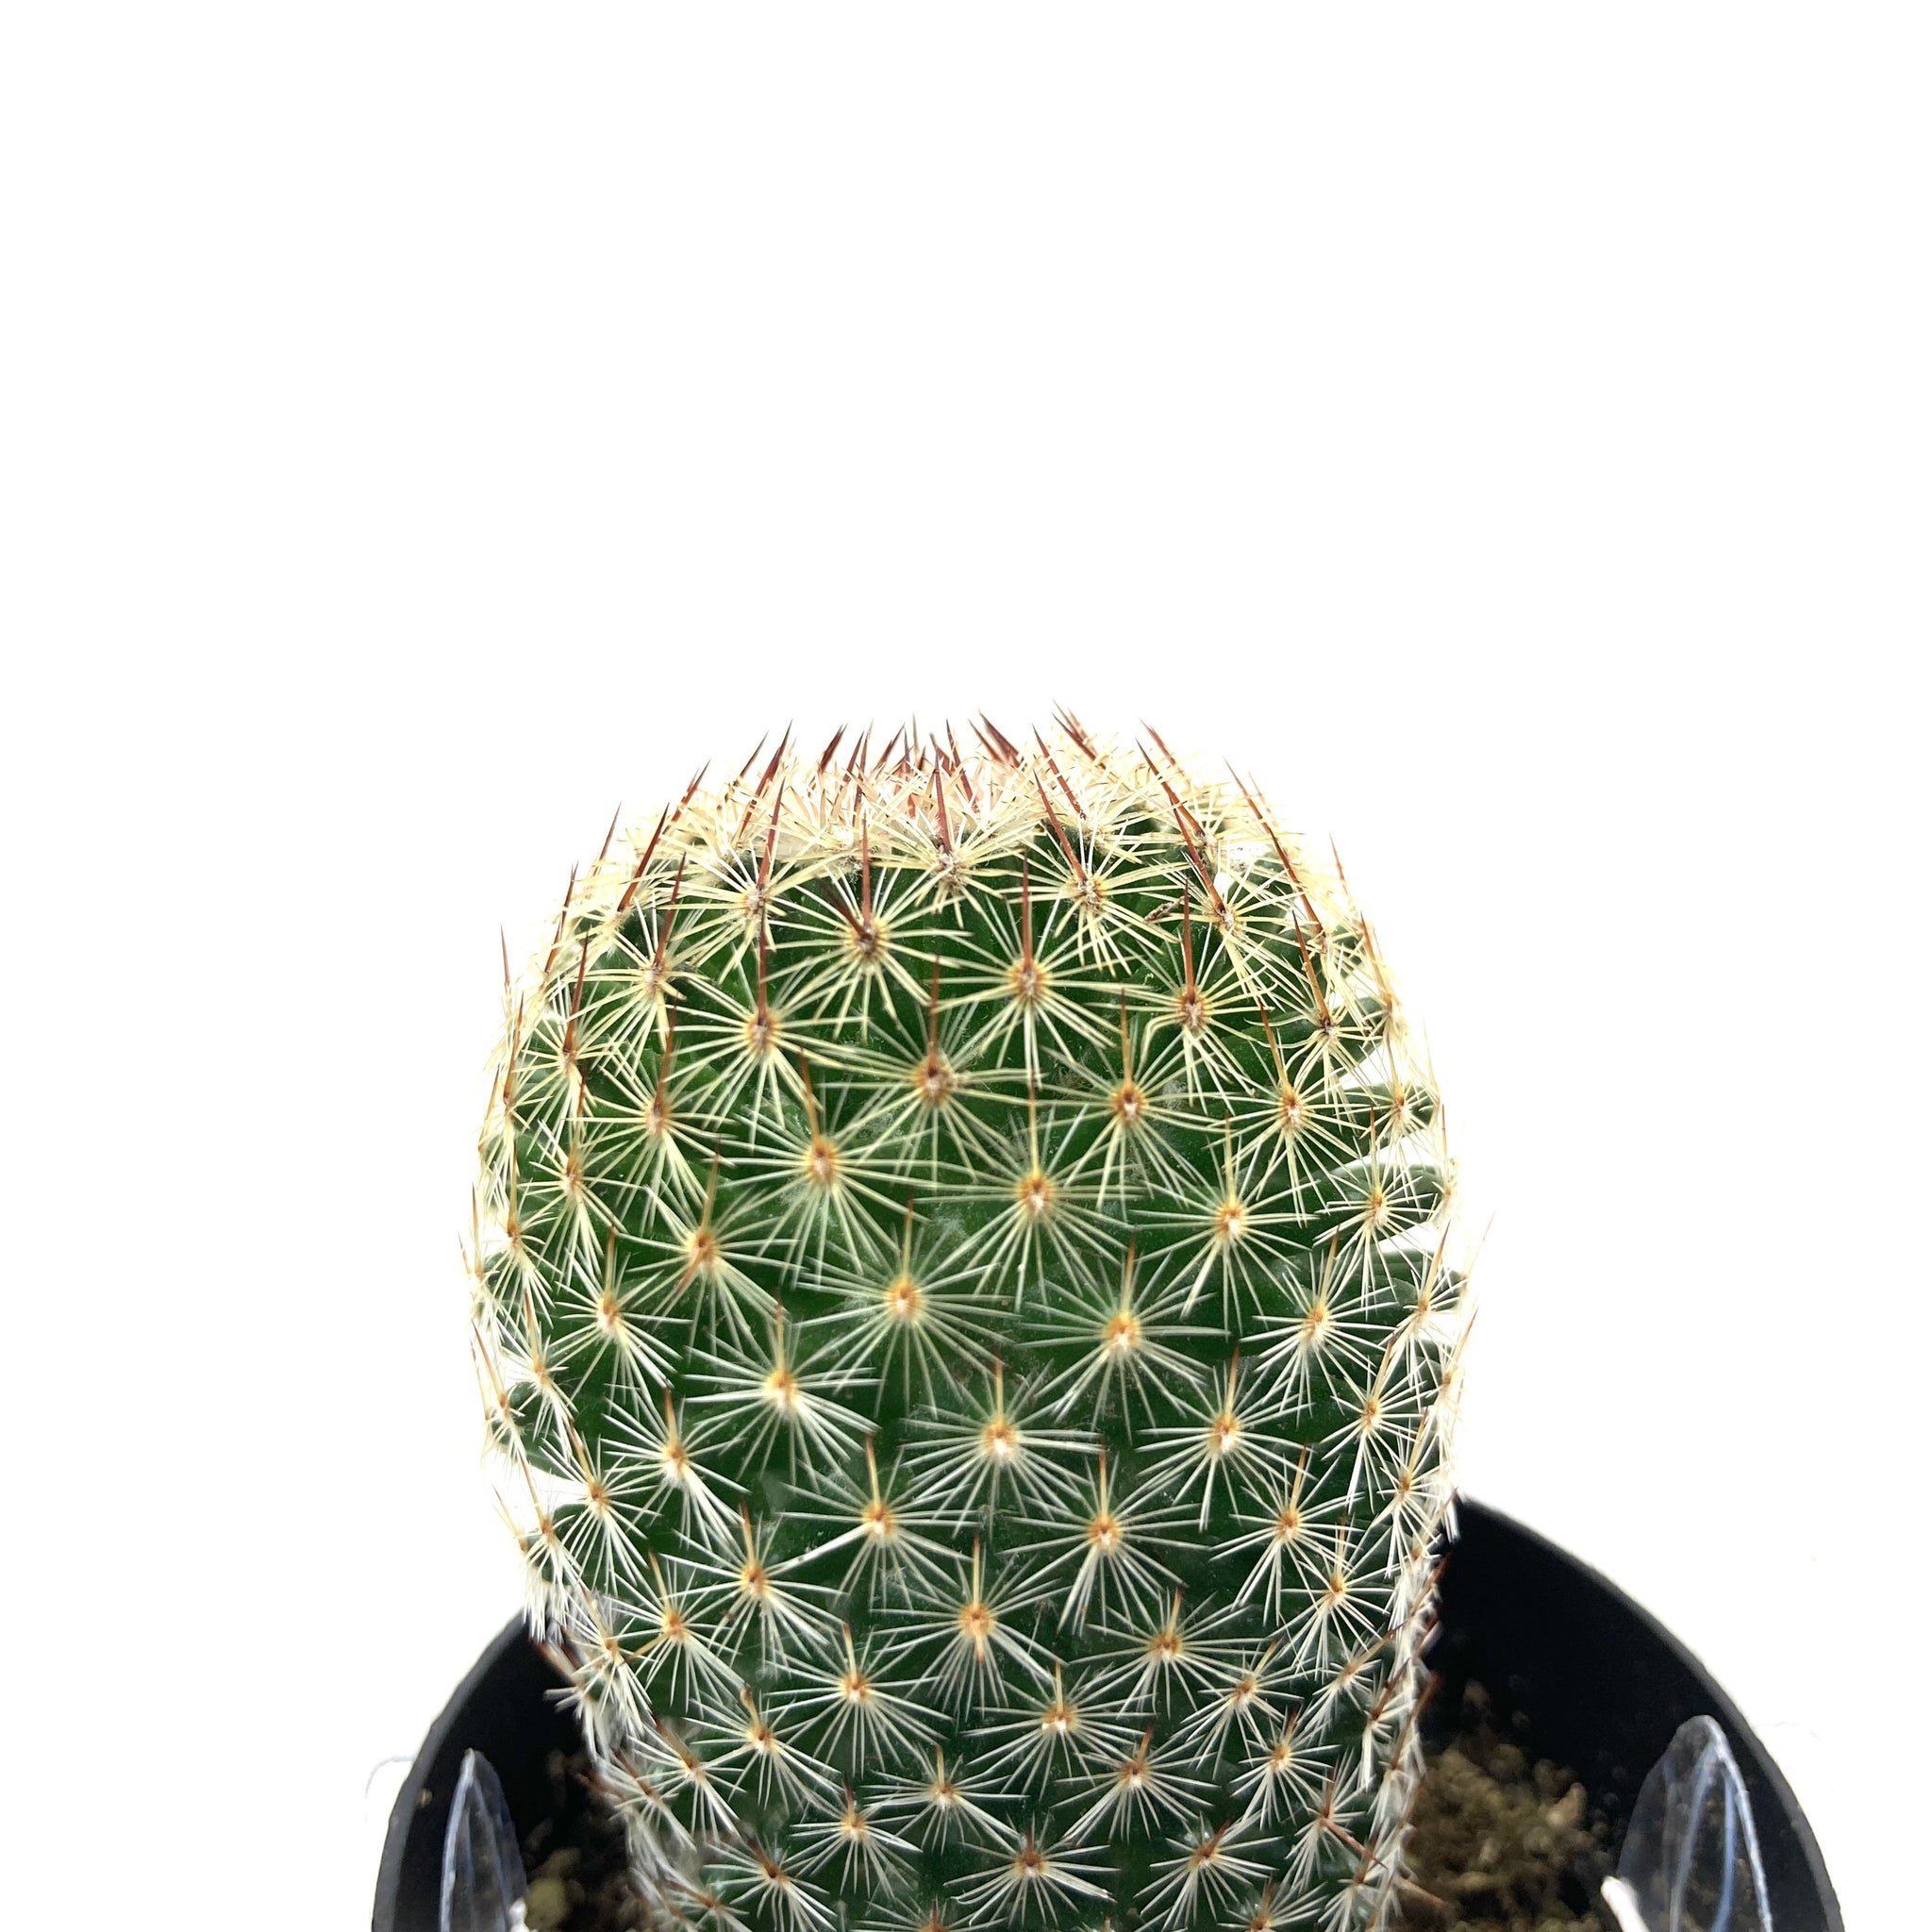 Terreau cactus - 2.5 L - Ferme De La Madeleine 